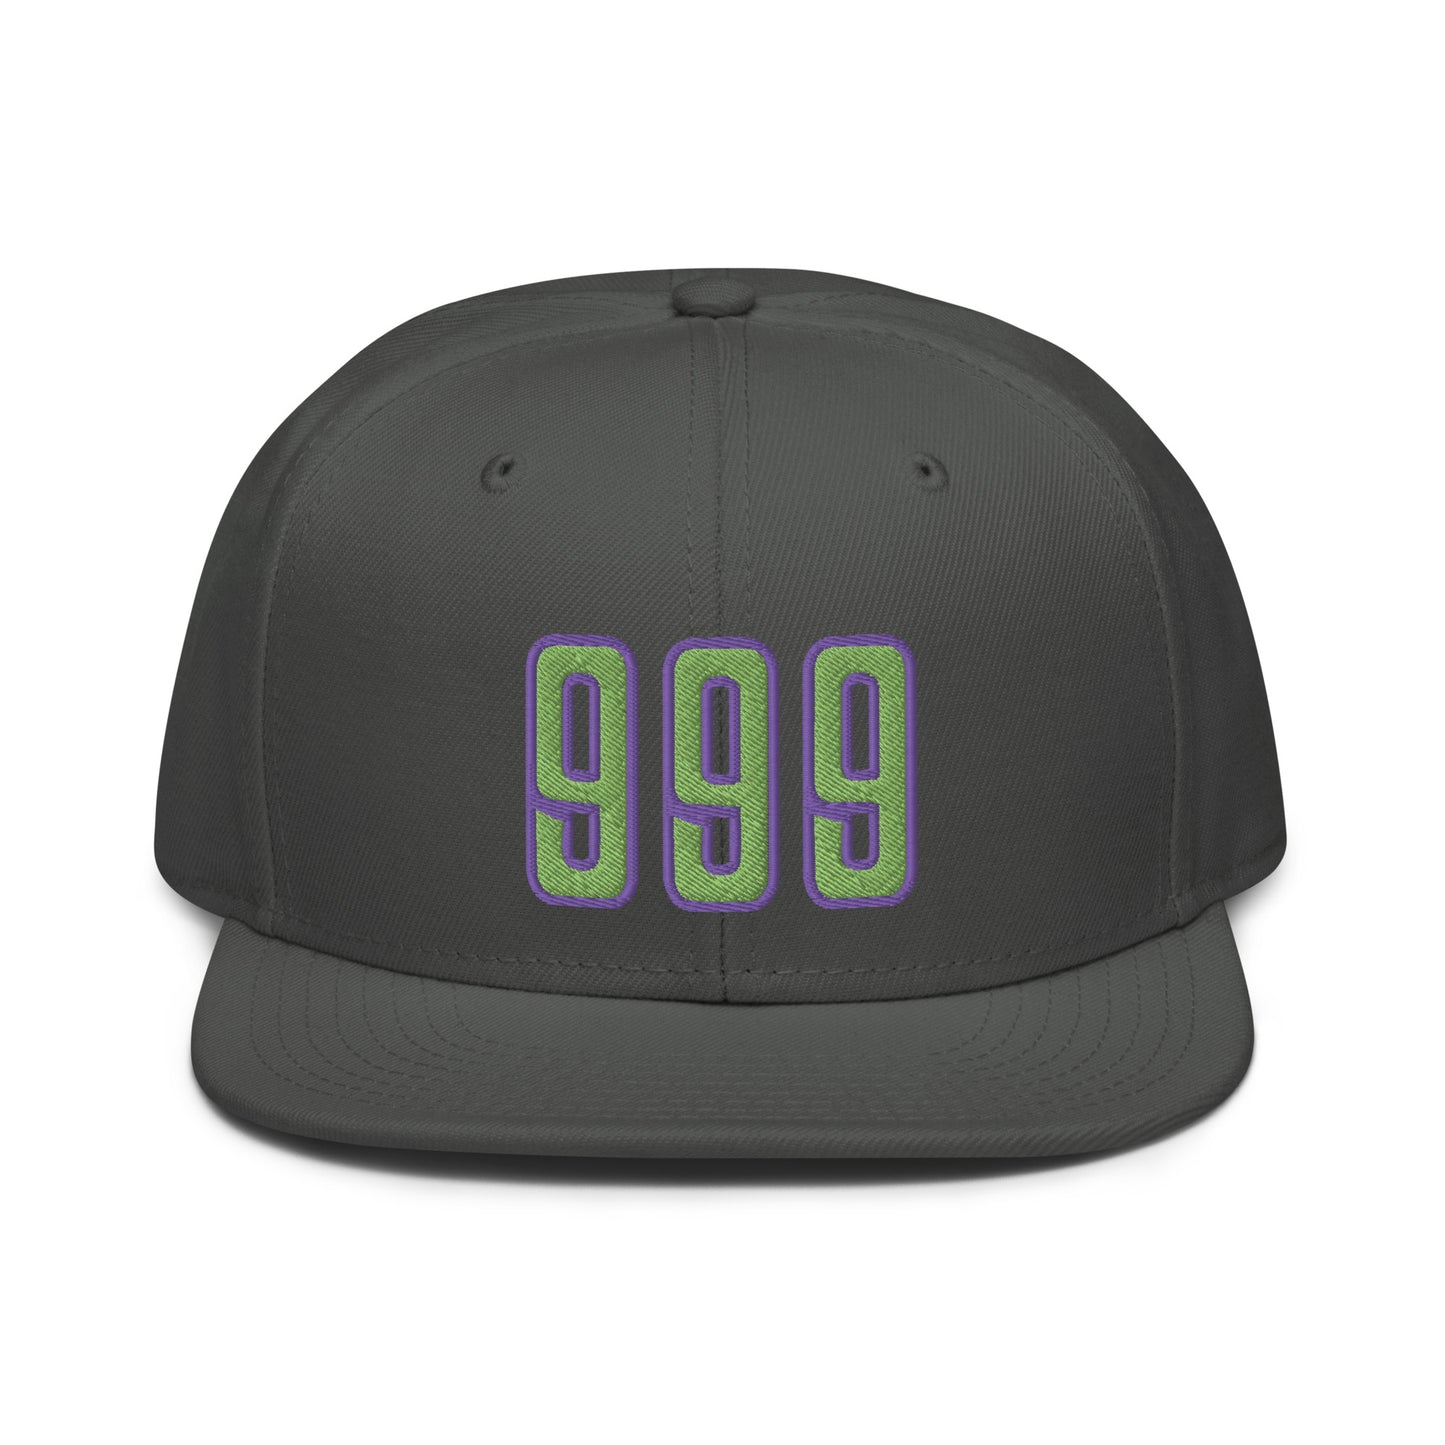 999 Haunts snapback hat